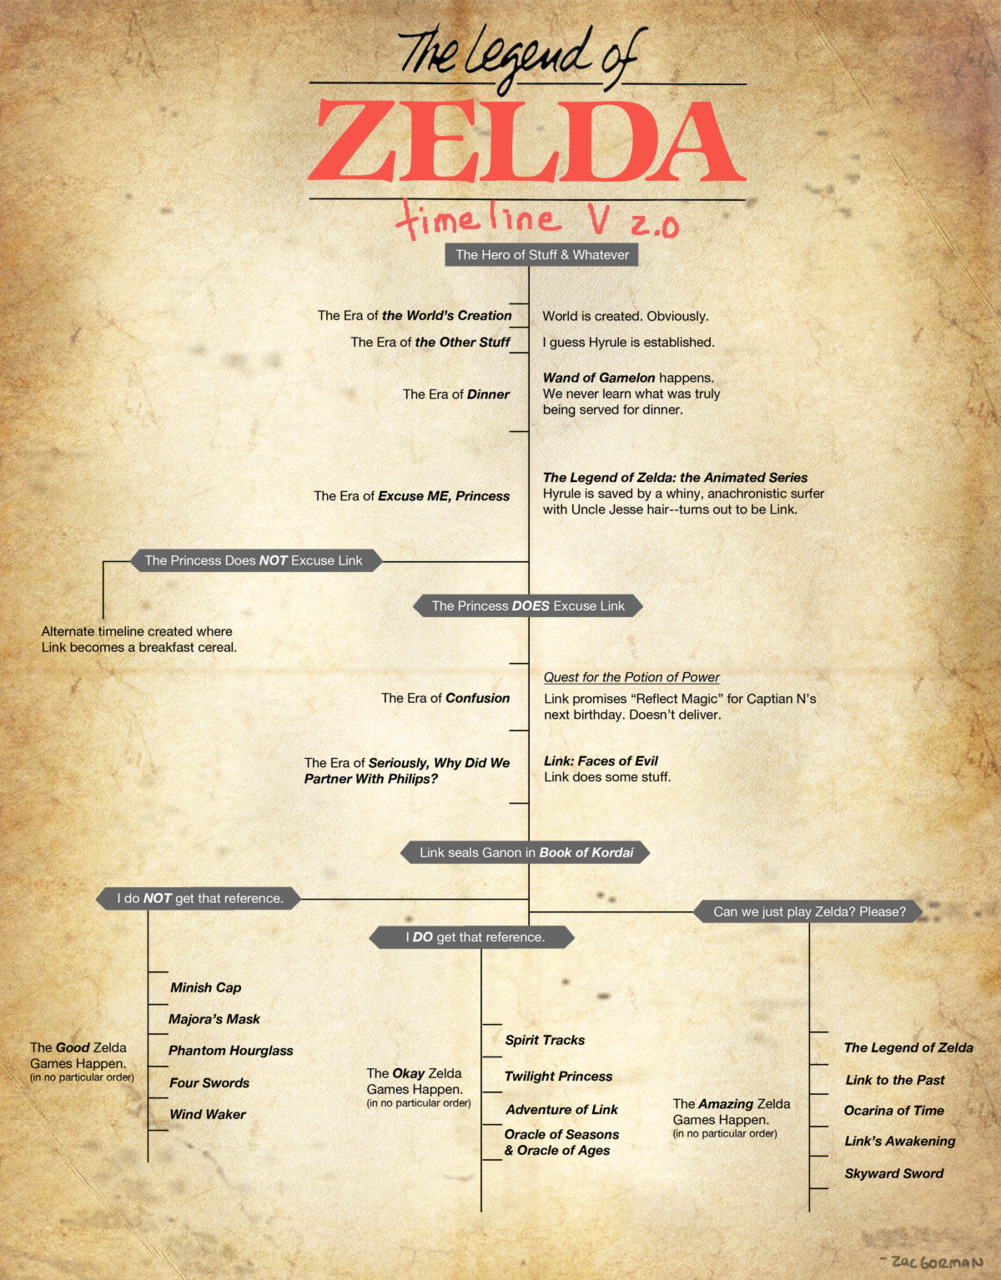 The Legend of Zelda Timeline v2.0 by Zac Gorman (click for a larger image). Four separate timelines!
Buy: The Legend of Zelda: Skyward Sword
Find: Nintendo DS/3DS release dates, discounts, & more
See also: More Legend of Zelda posts
[Via Zac Gorman]